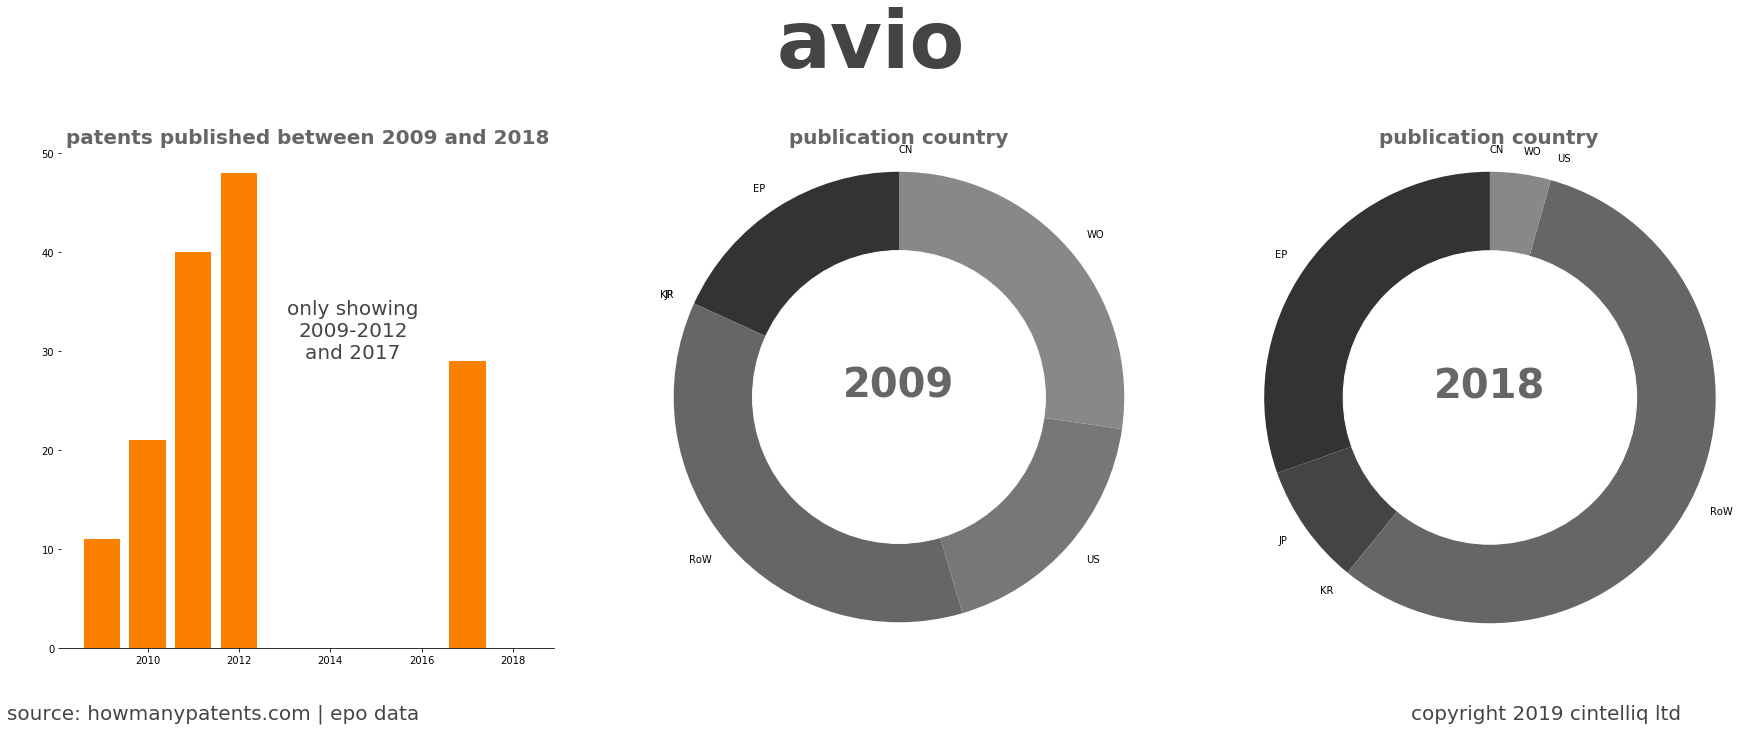 summary of patents for Avio